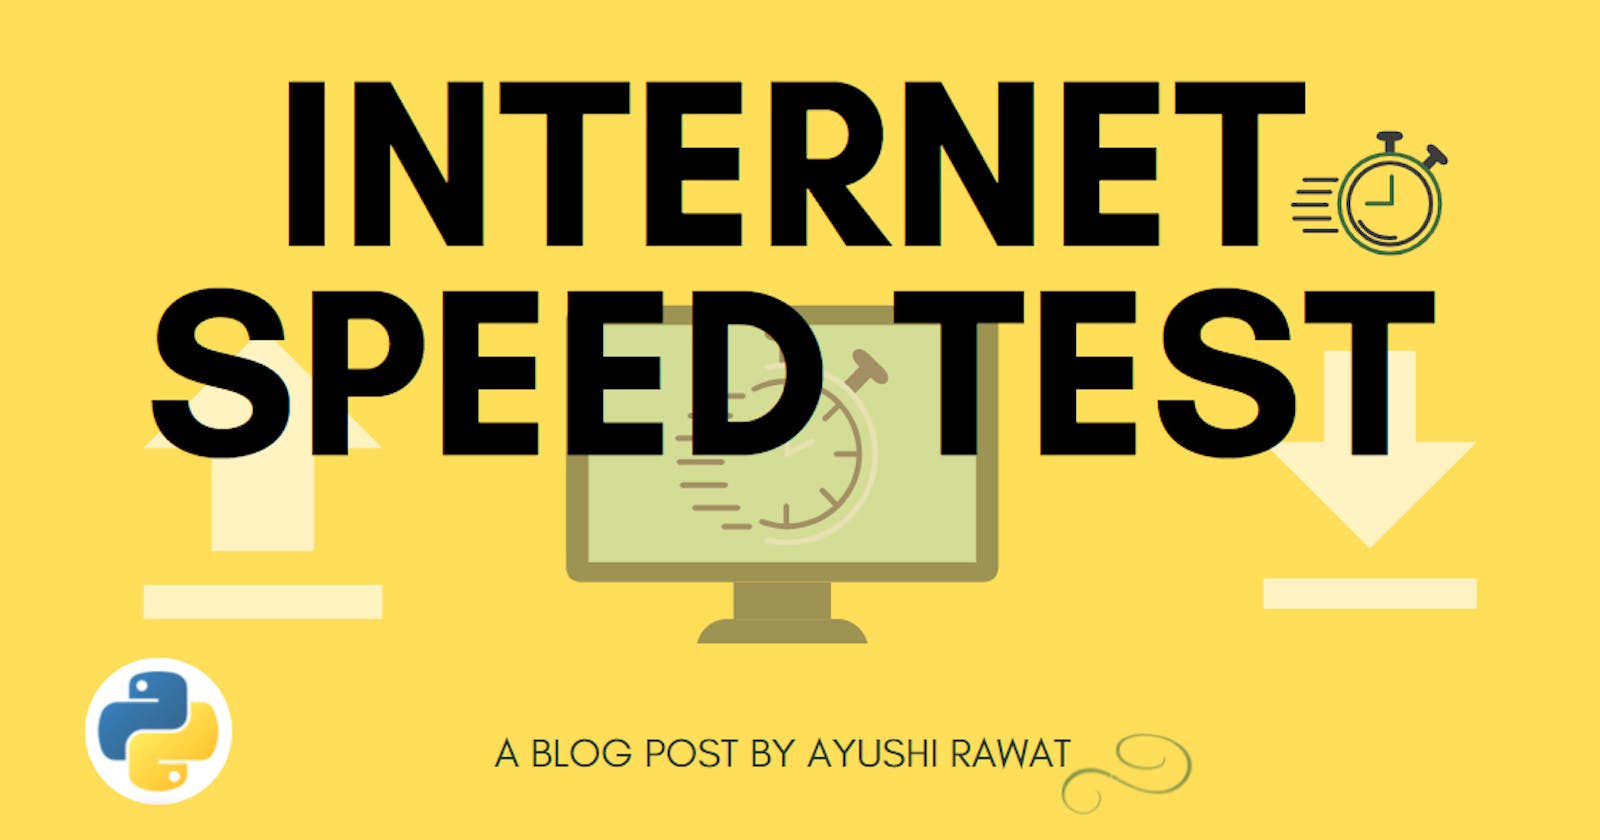 Internet Speed Test using Python